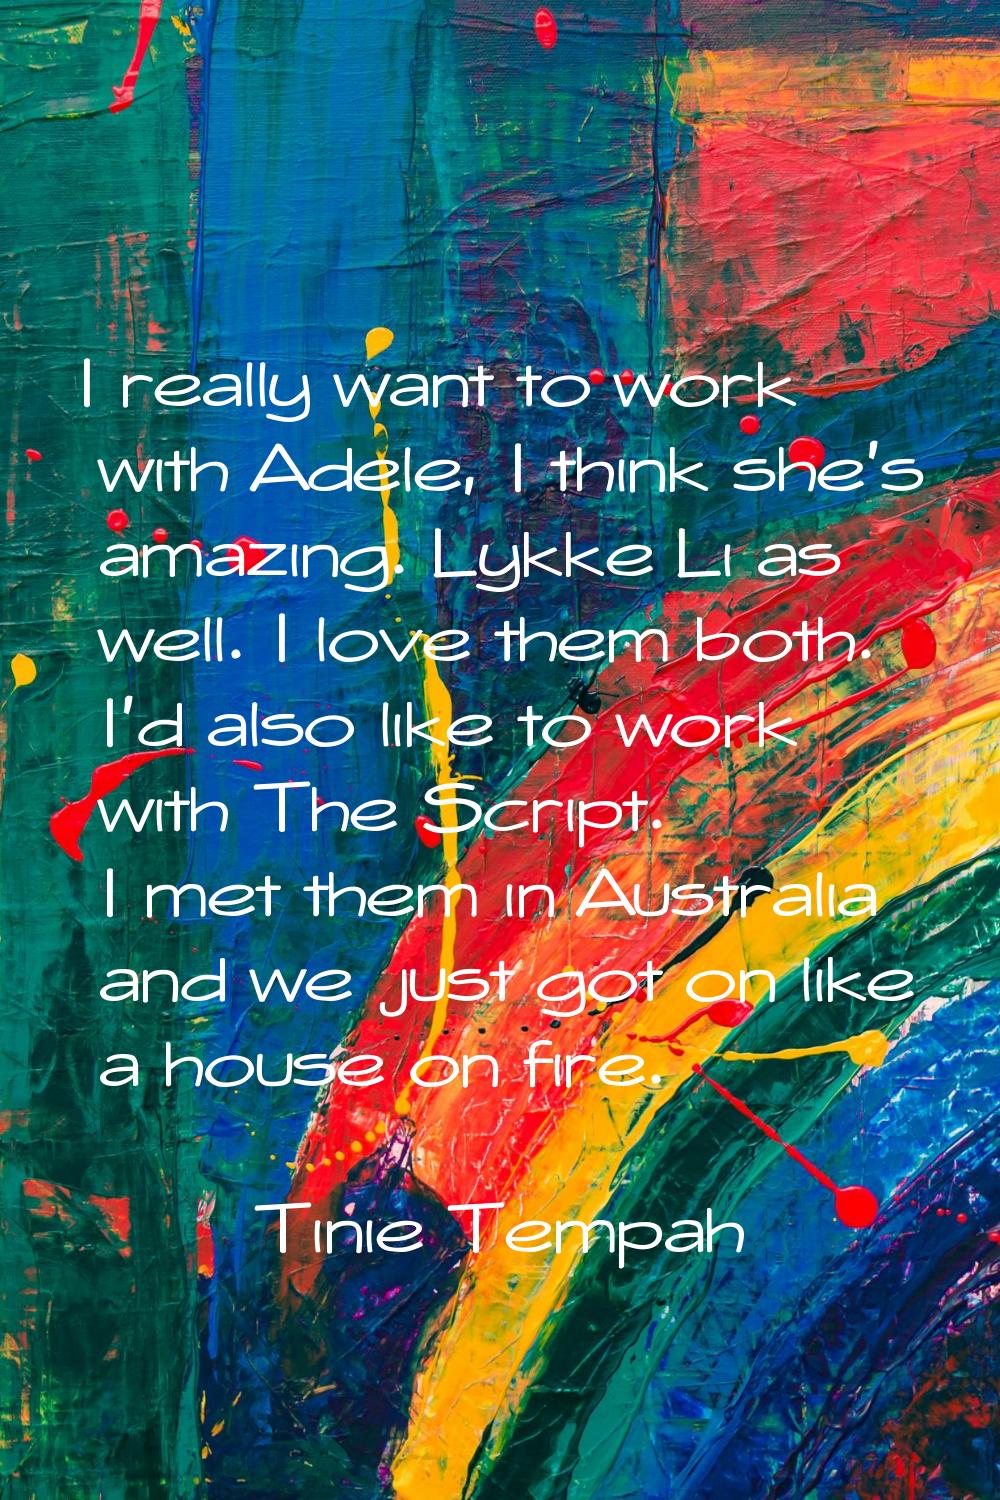 I really want to work with Adele, I think she's amazing. Lykke Li as well. I love them both. I'd al